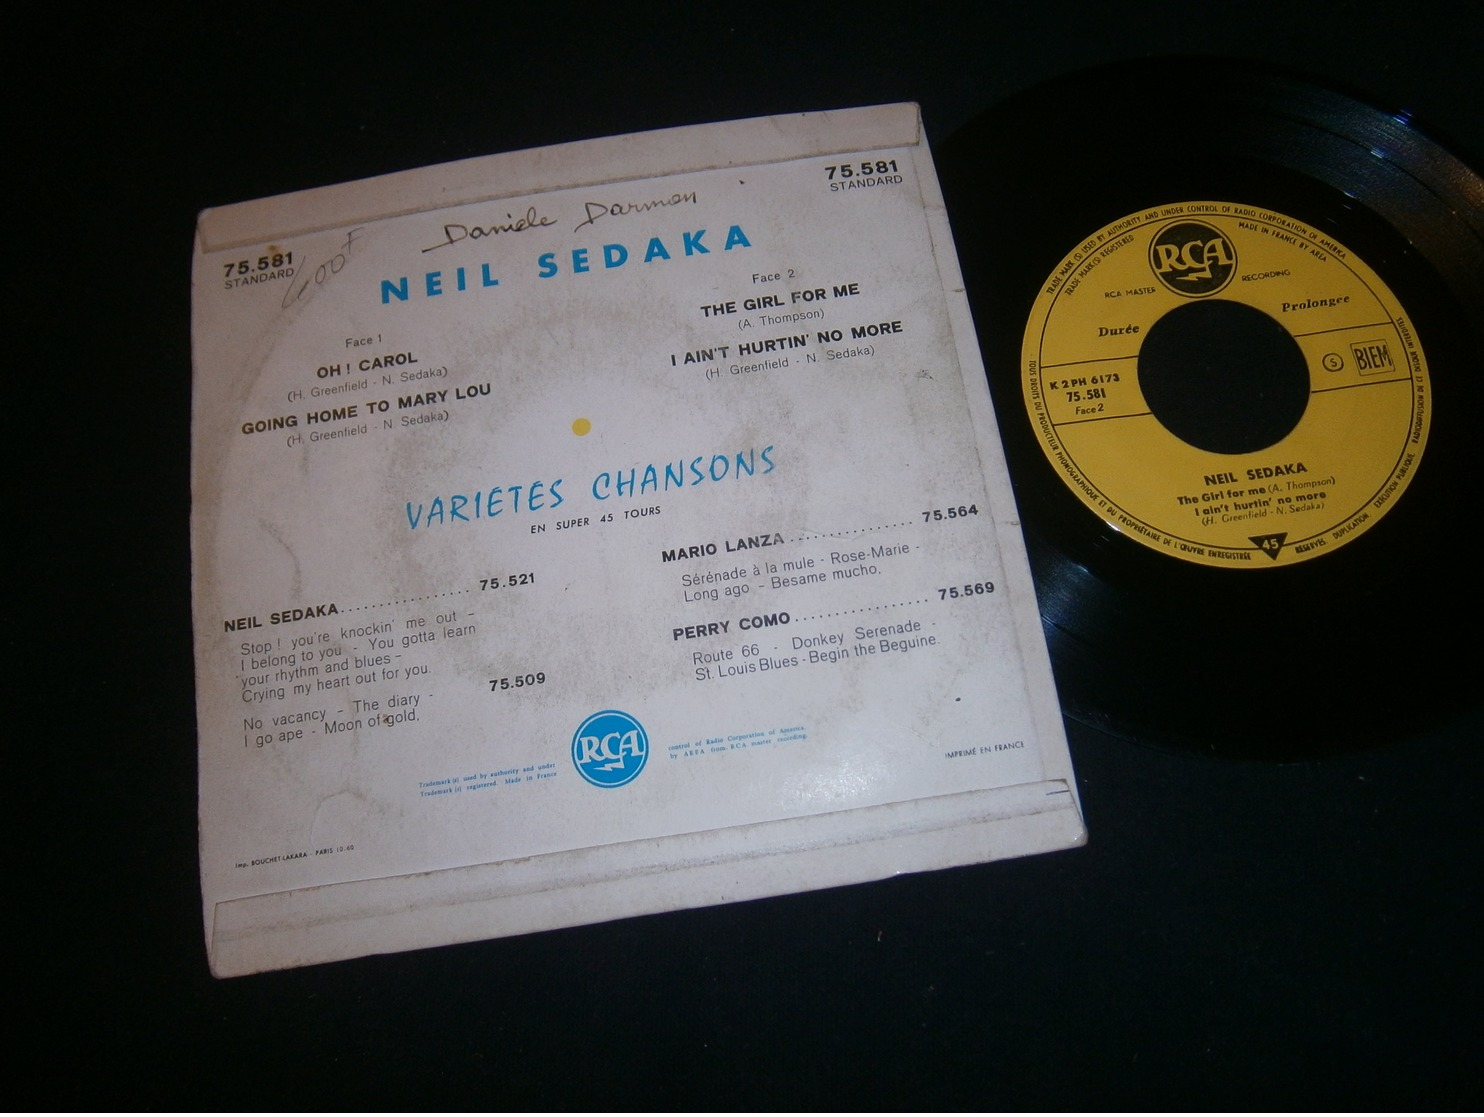 EP 45t / Neil Sedaka Oh Carol RCA - Rock